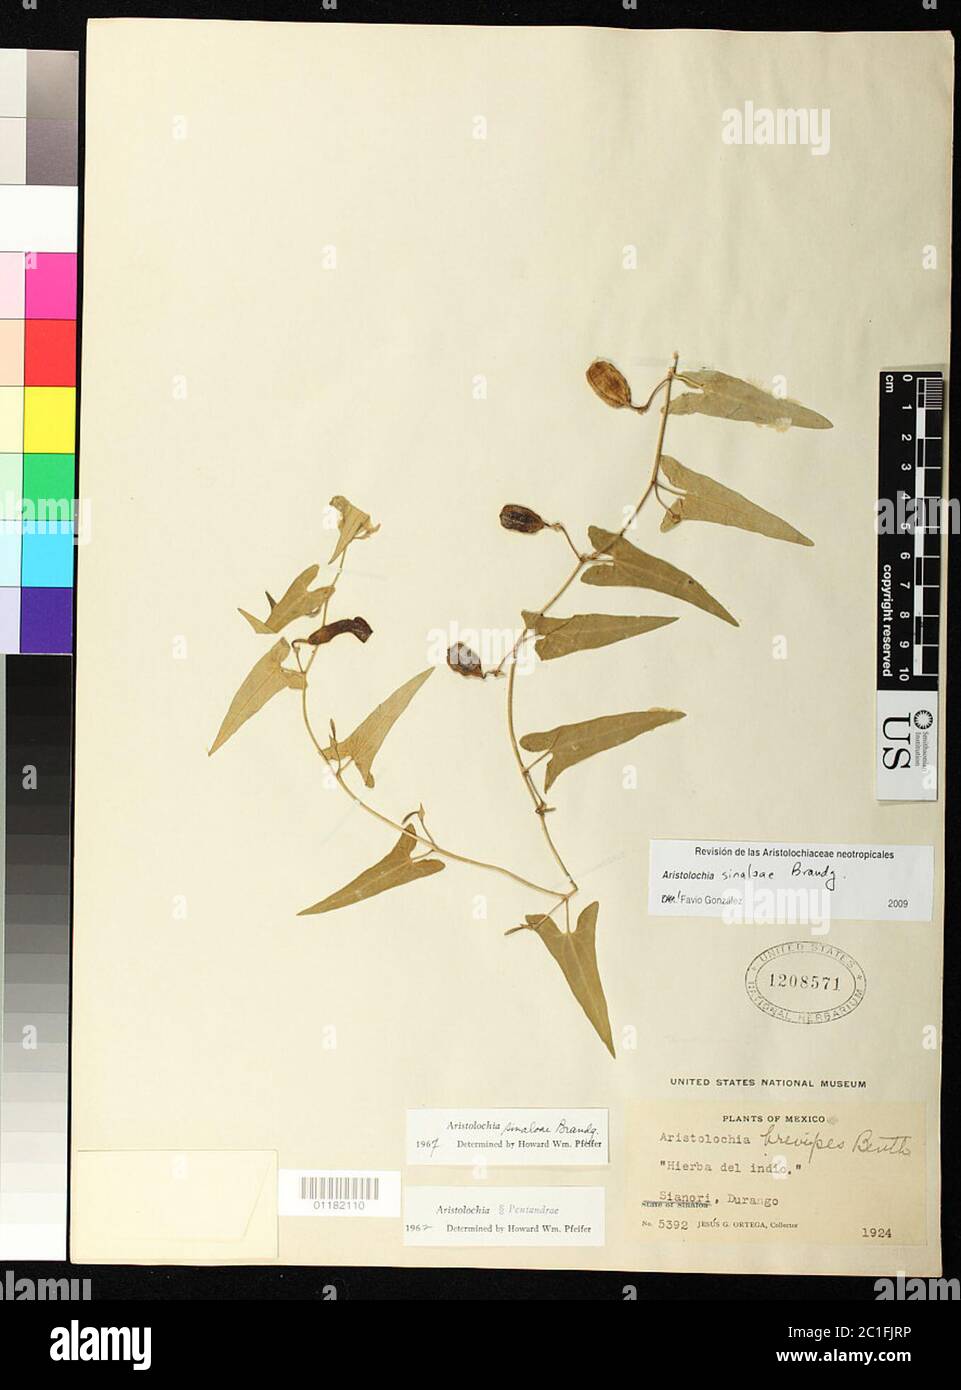 Aristolochia sinaloae Brandegee Aristolochia sinaloae Brandegee. Stock Photo